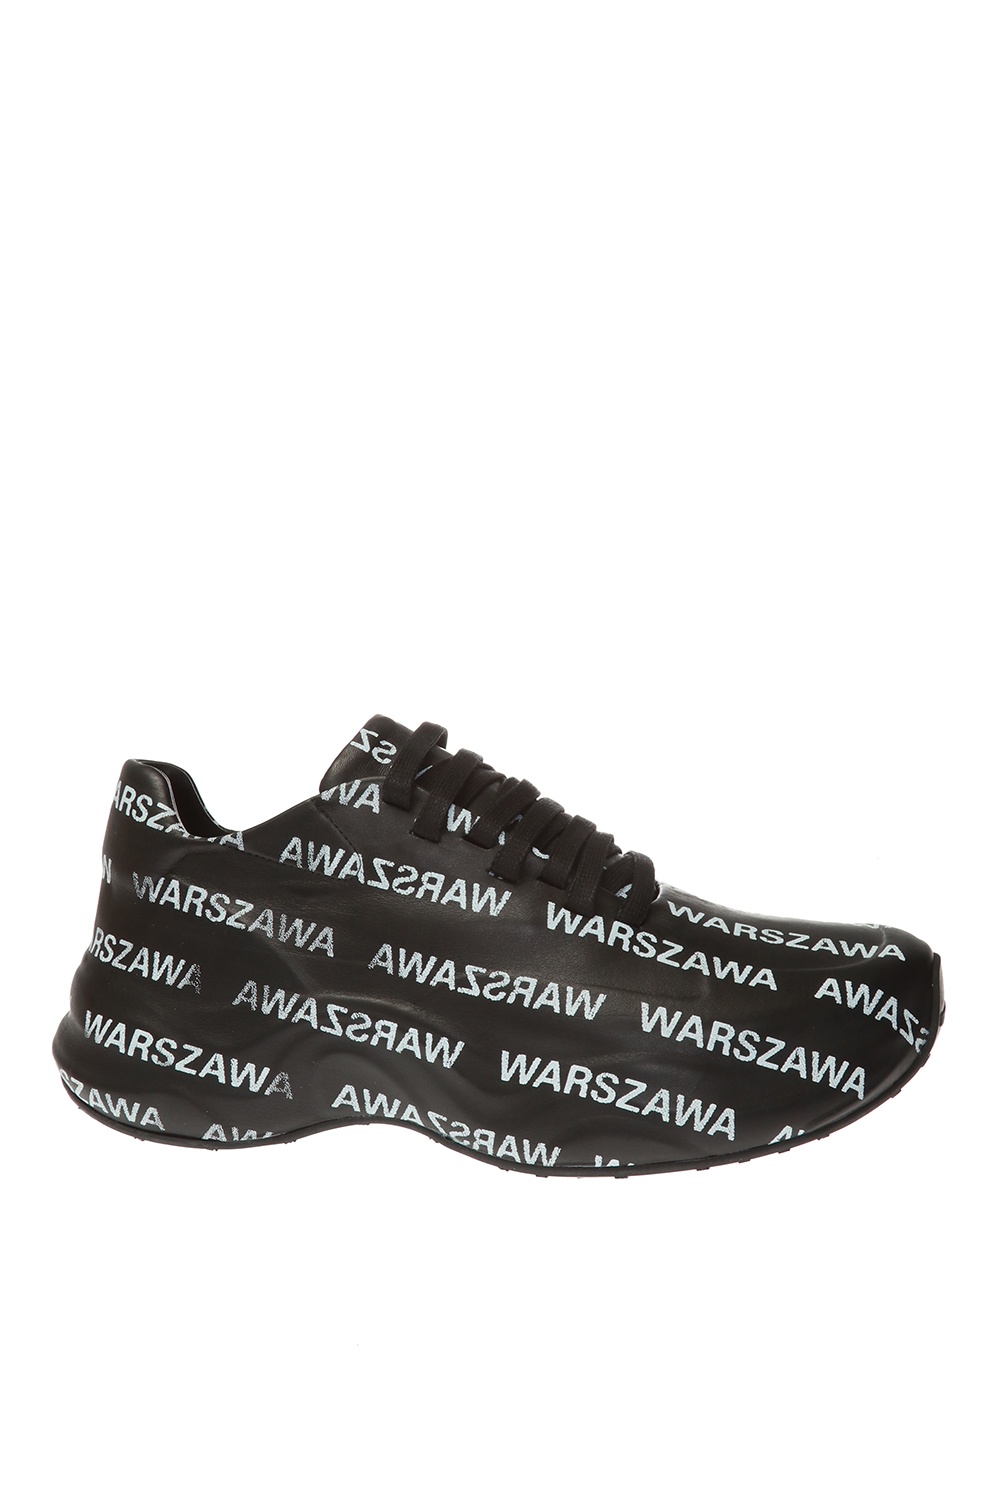 Warszawa Moon Sneakers Misbhv Gov Us